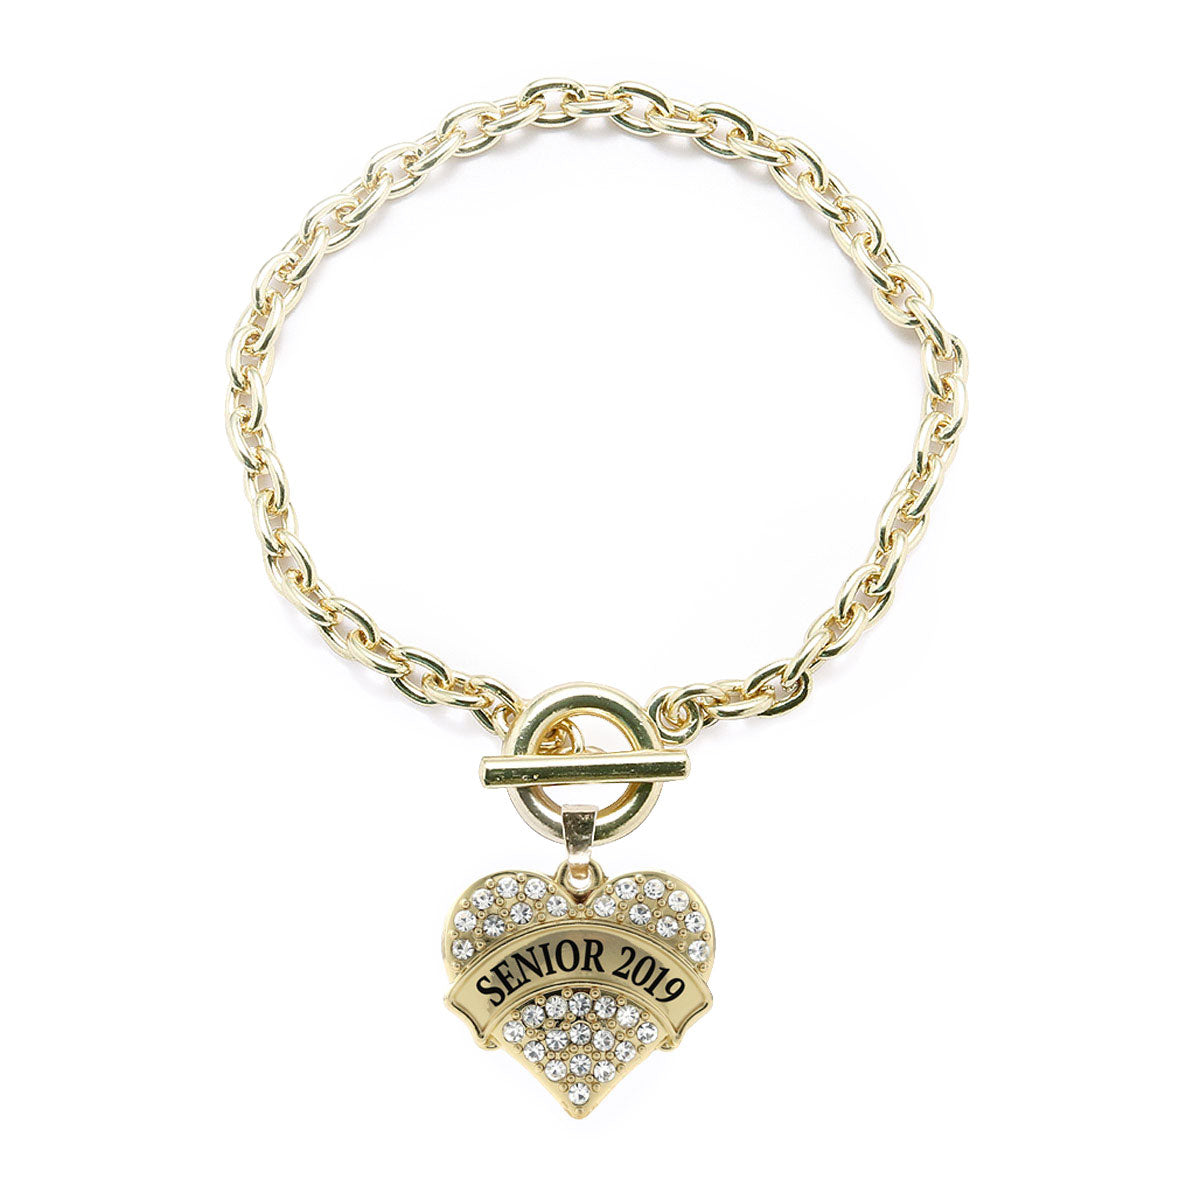 Gold Senior 2019 Pave Heart Charm Toggle Bracelet